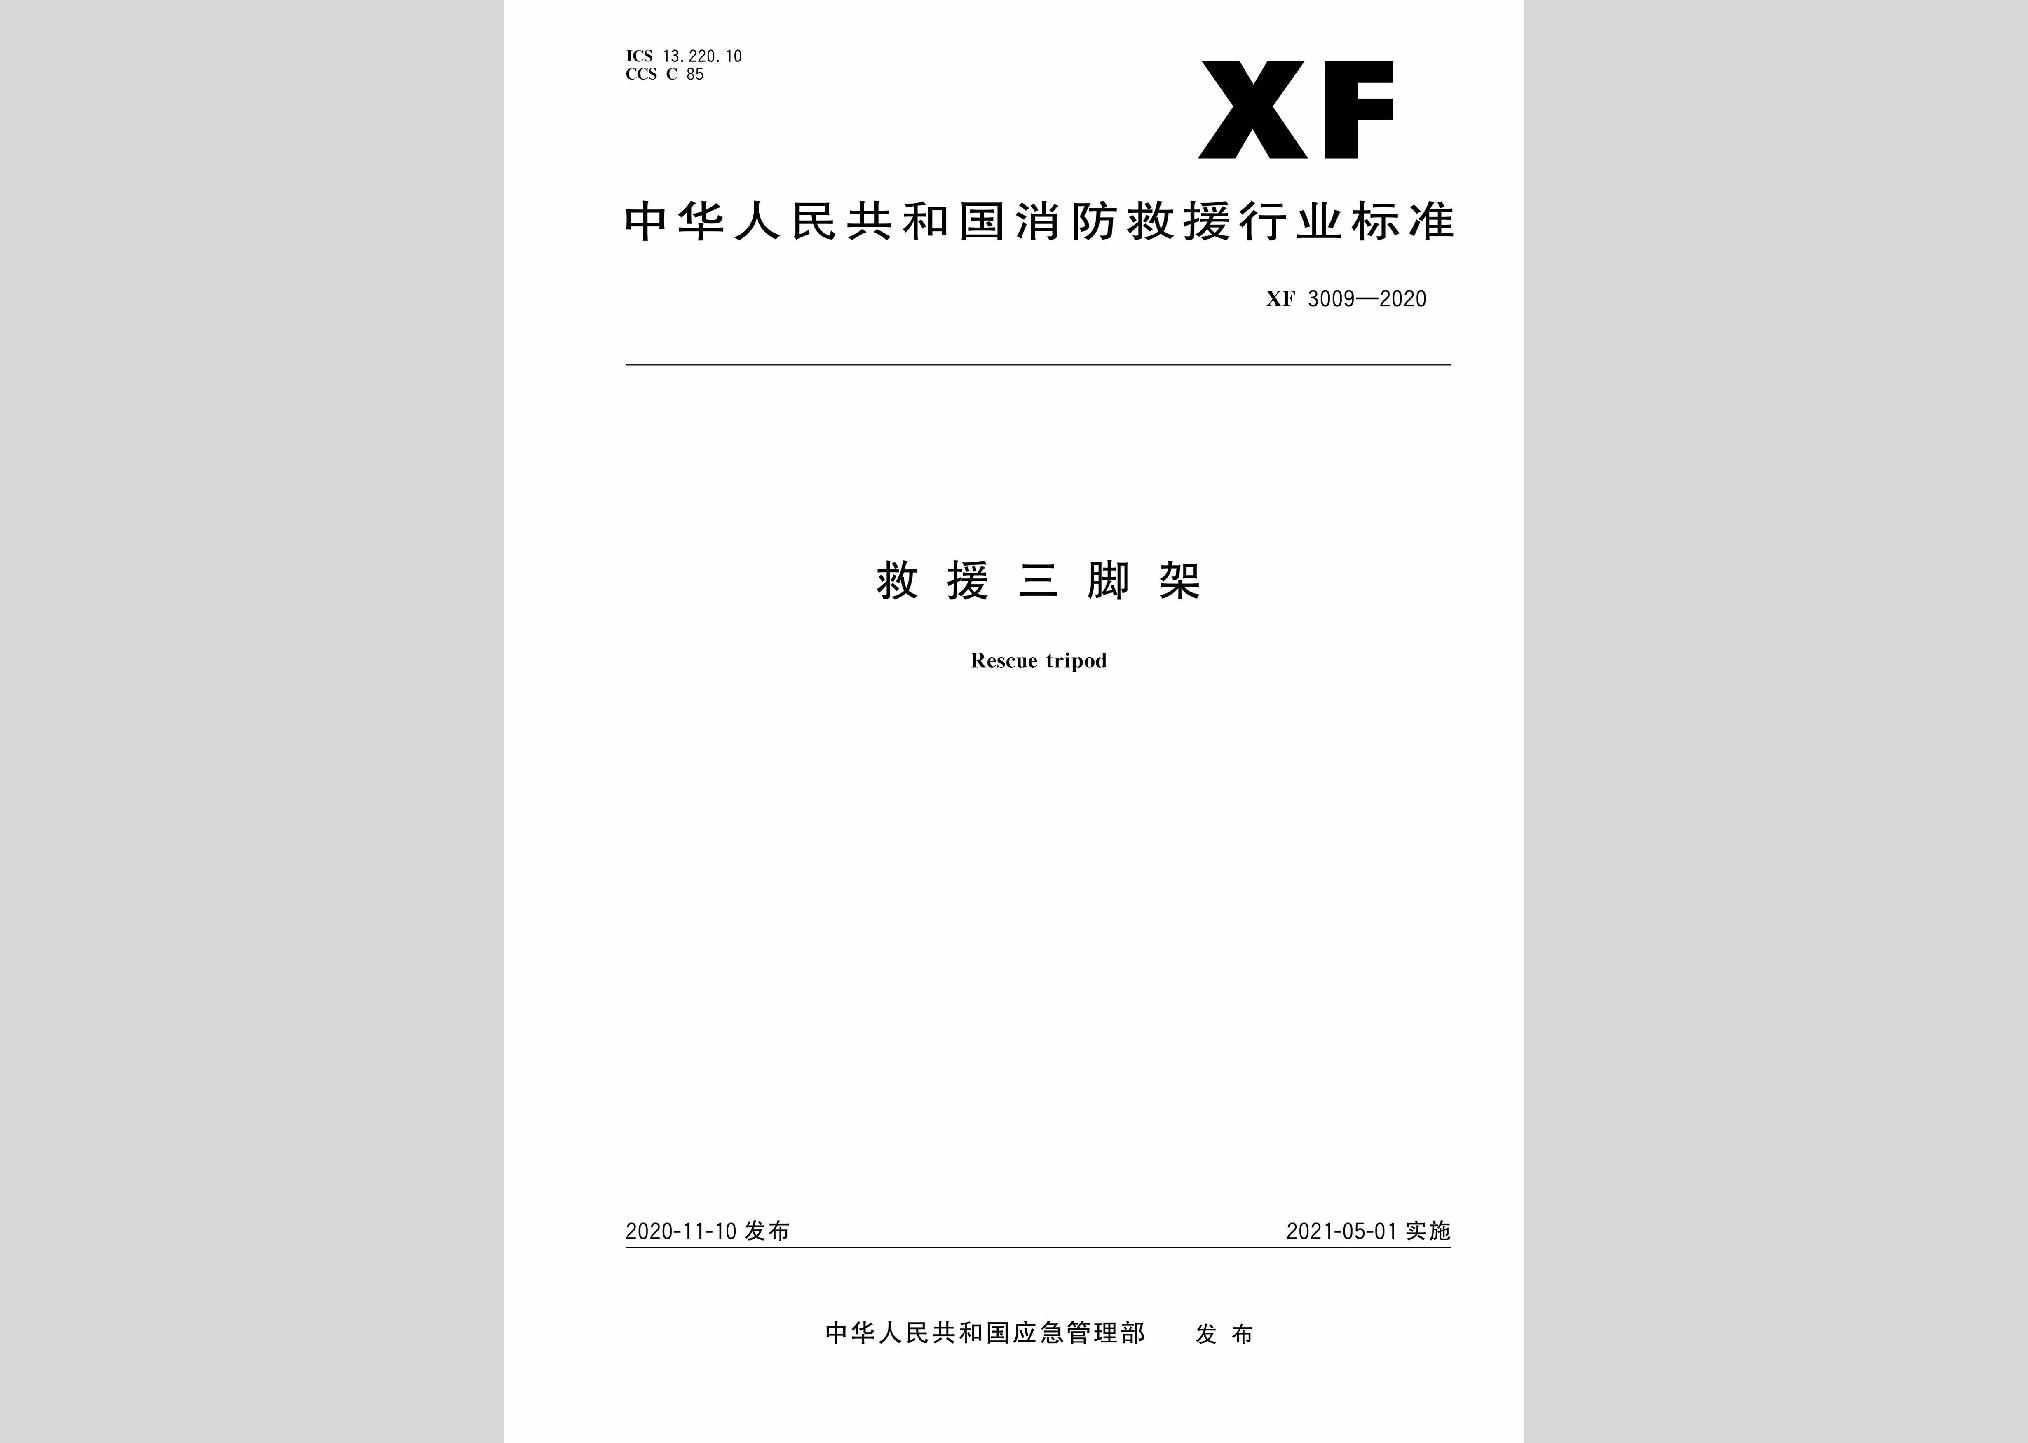 XF3009-2020：救援三角架